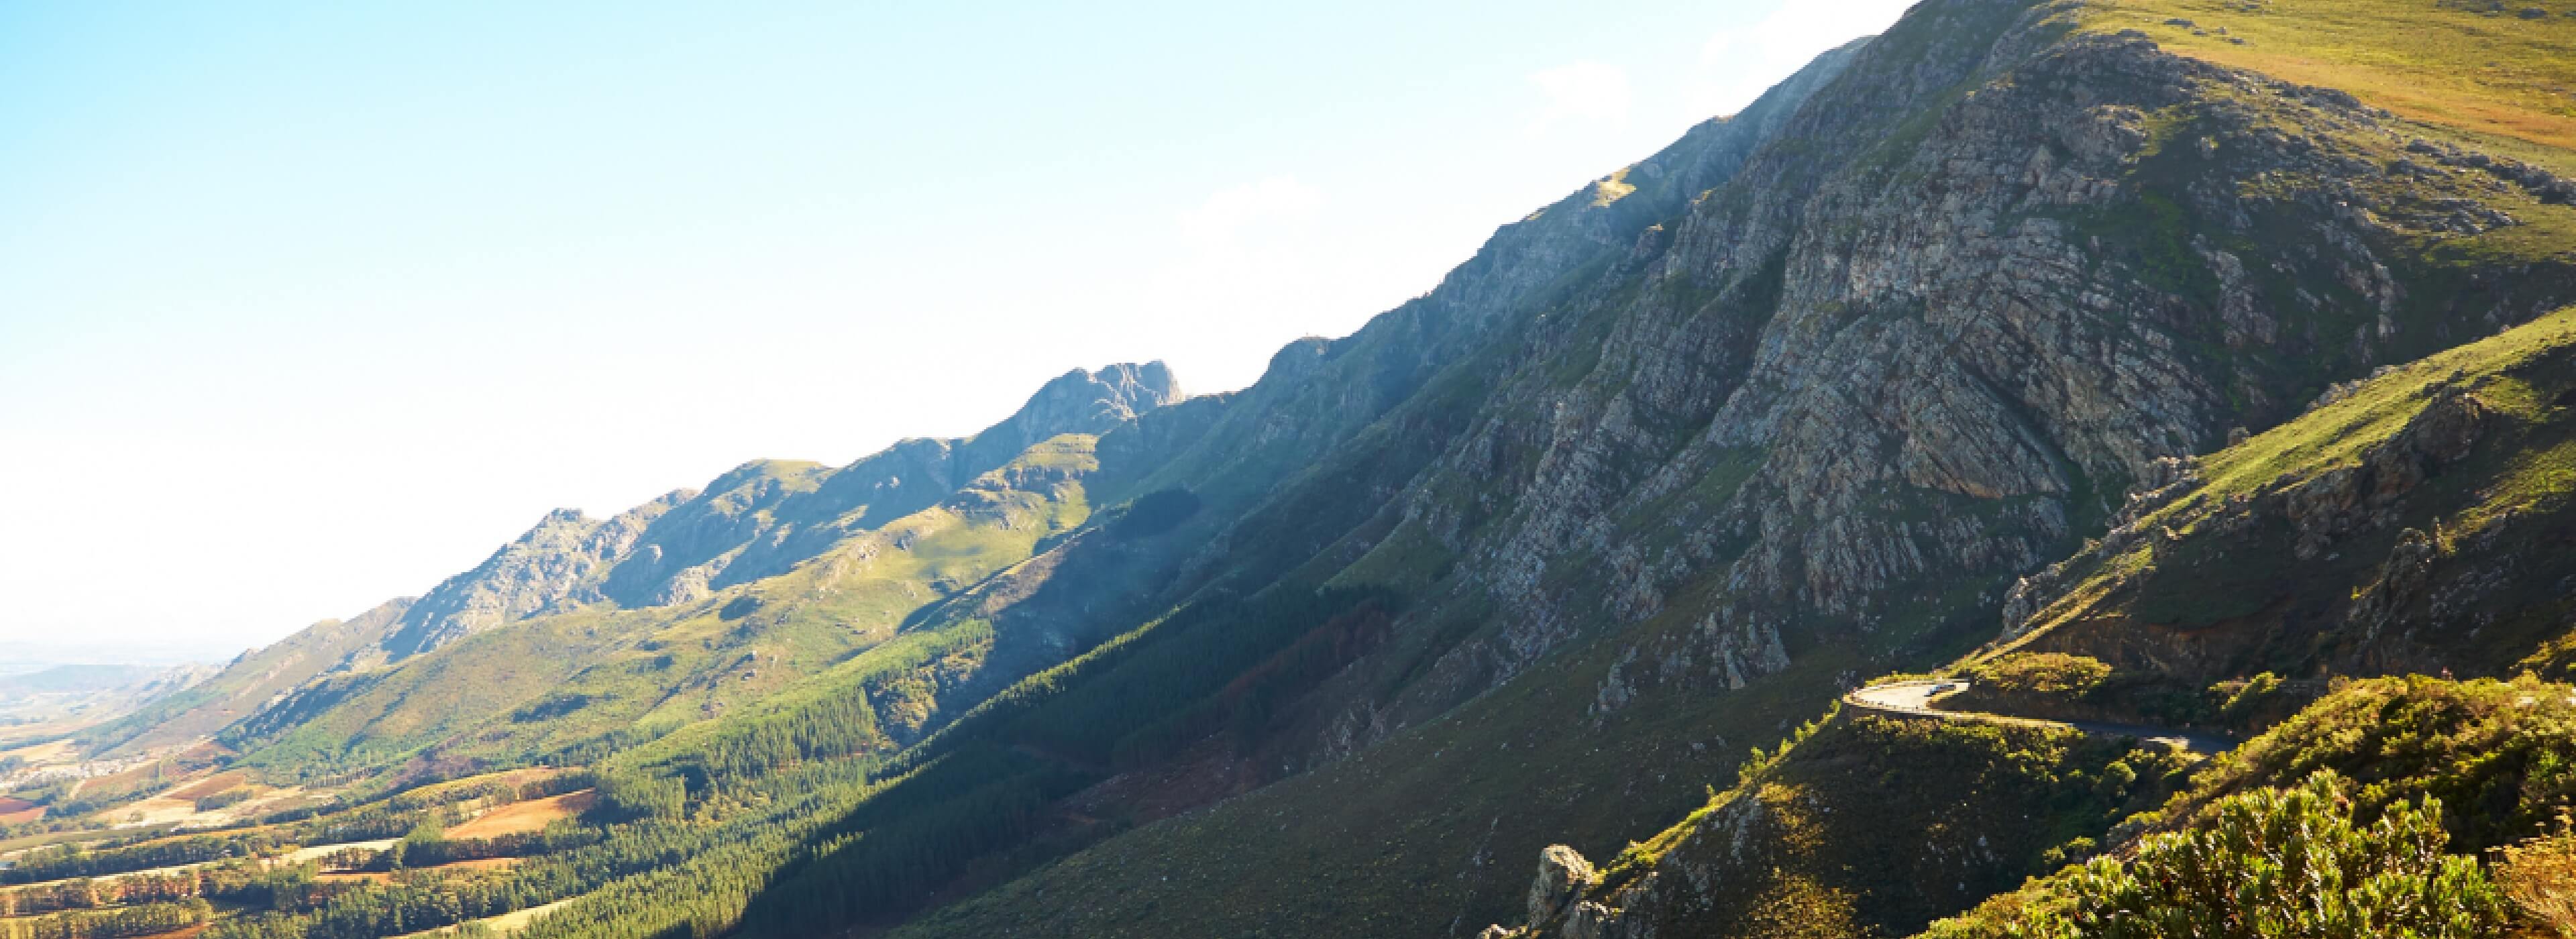 Leeucollection blog - Hiking Franschhoek hero slide 2